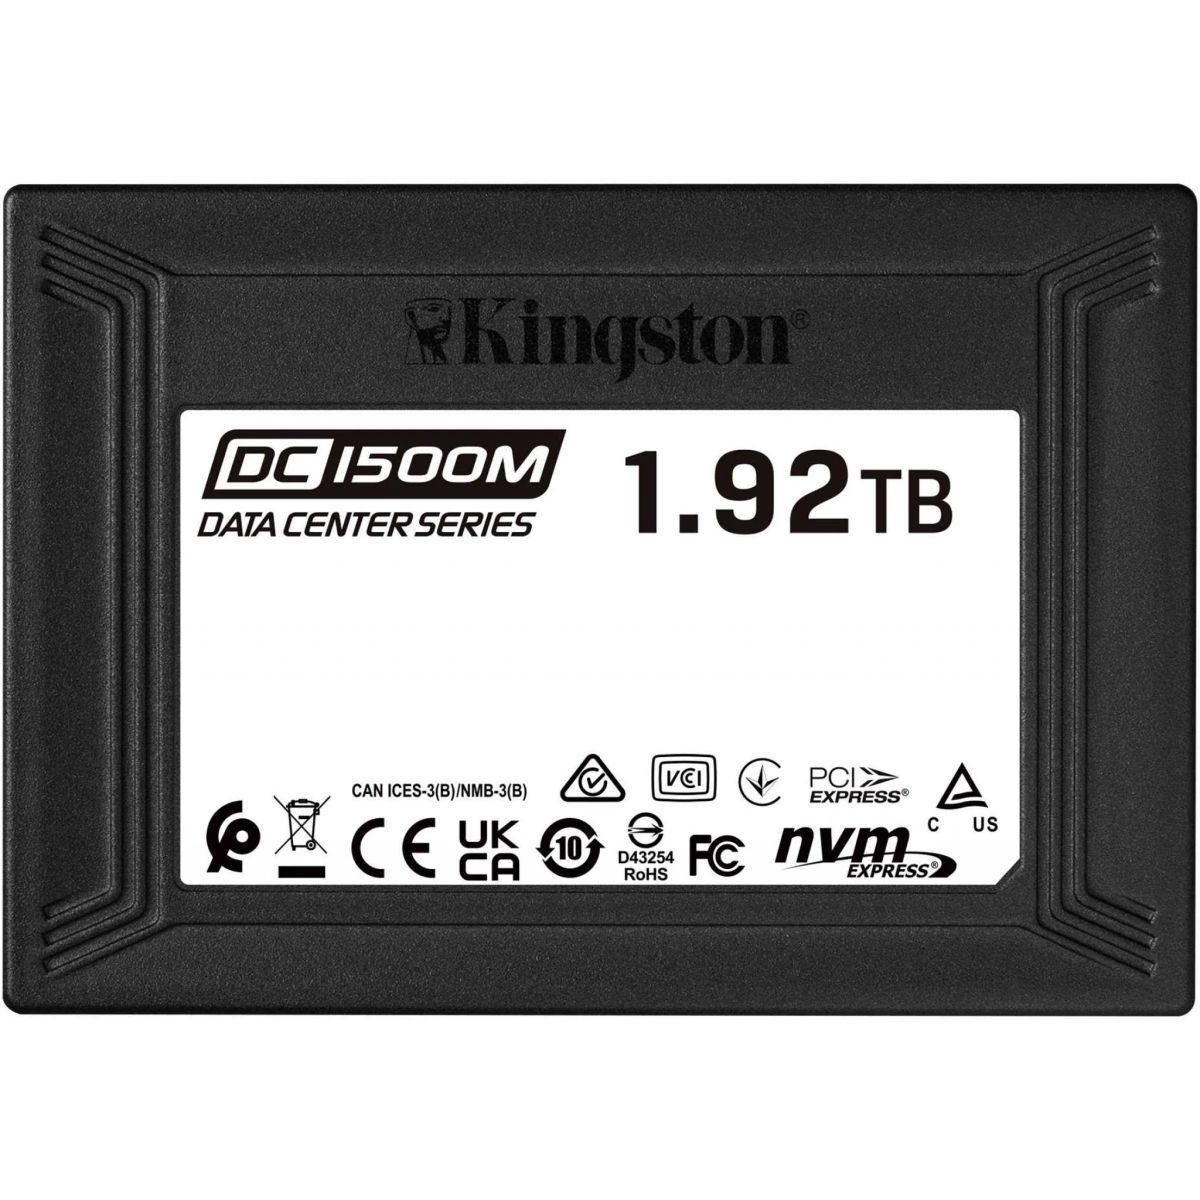 KINGSTON SEDC1500M/1920G, 12 GB, HDD, intern Zoll, 2,5 SSD